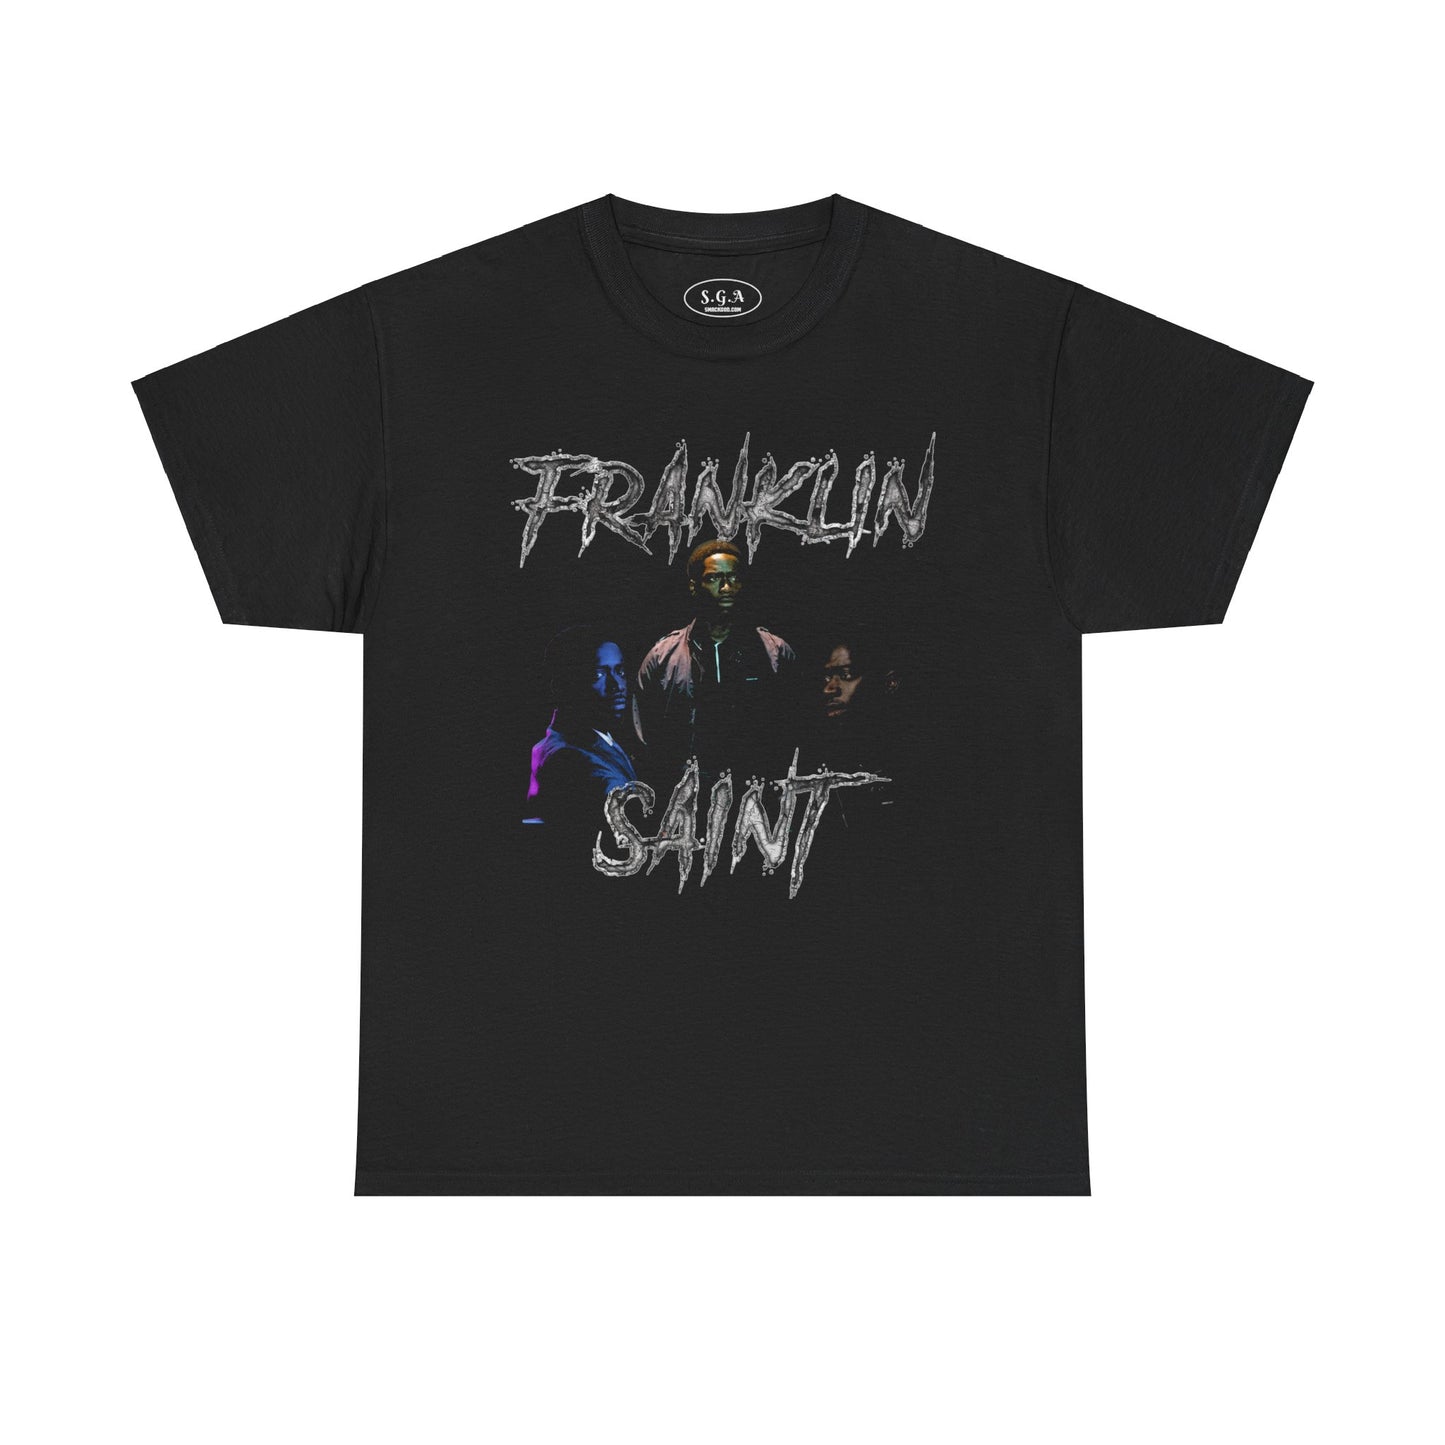  "Snowfall: Franklin Saint T-Shirt - Smack God Apparel"